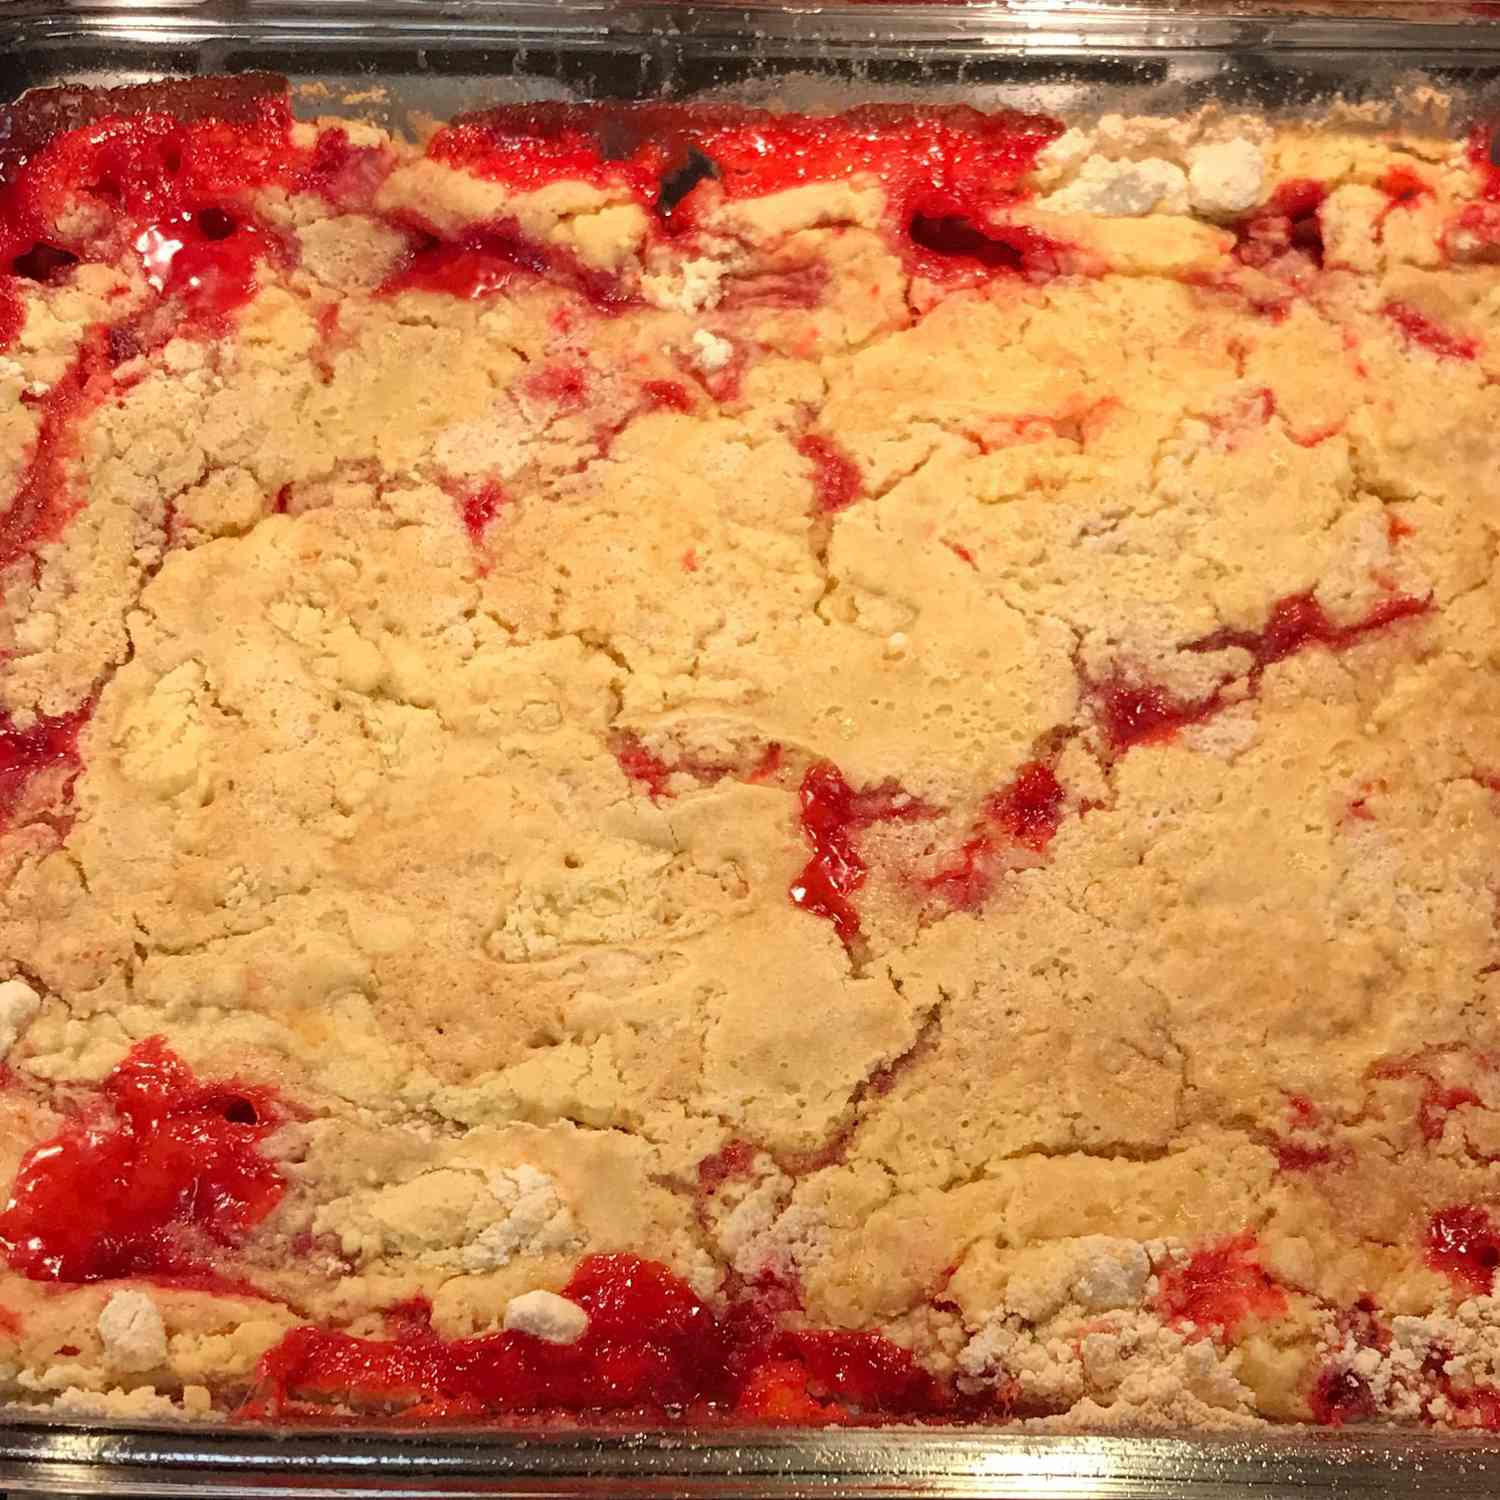 a pyrex dish of strawberry rhubarb dump cake